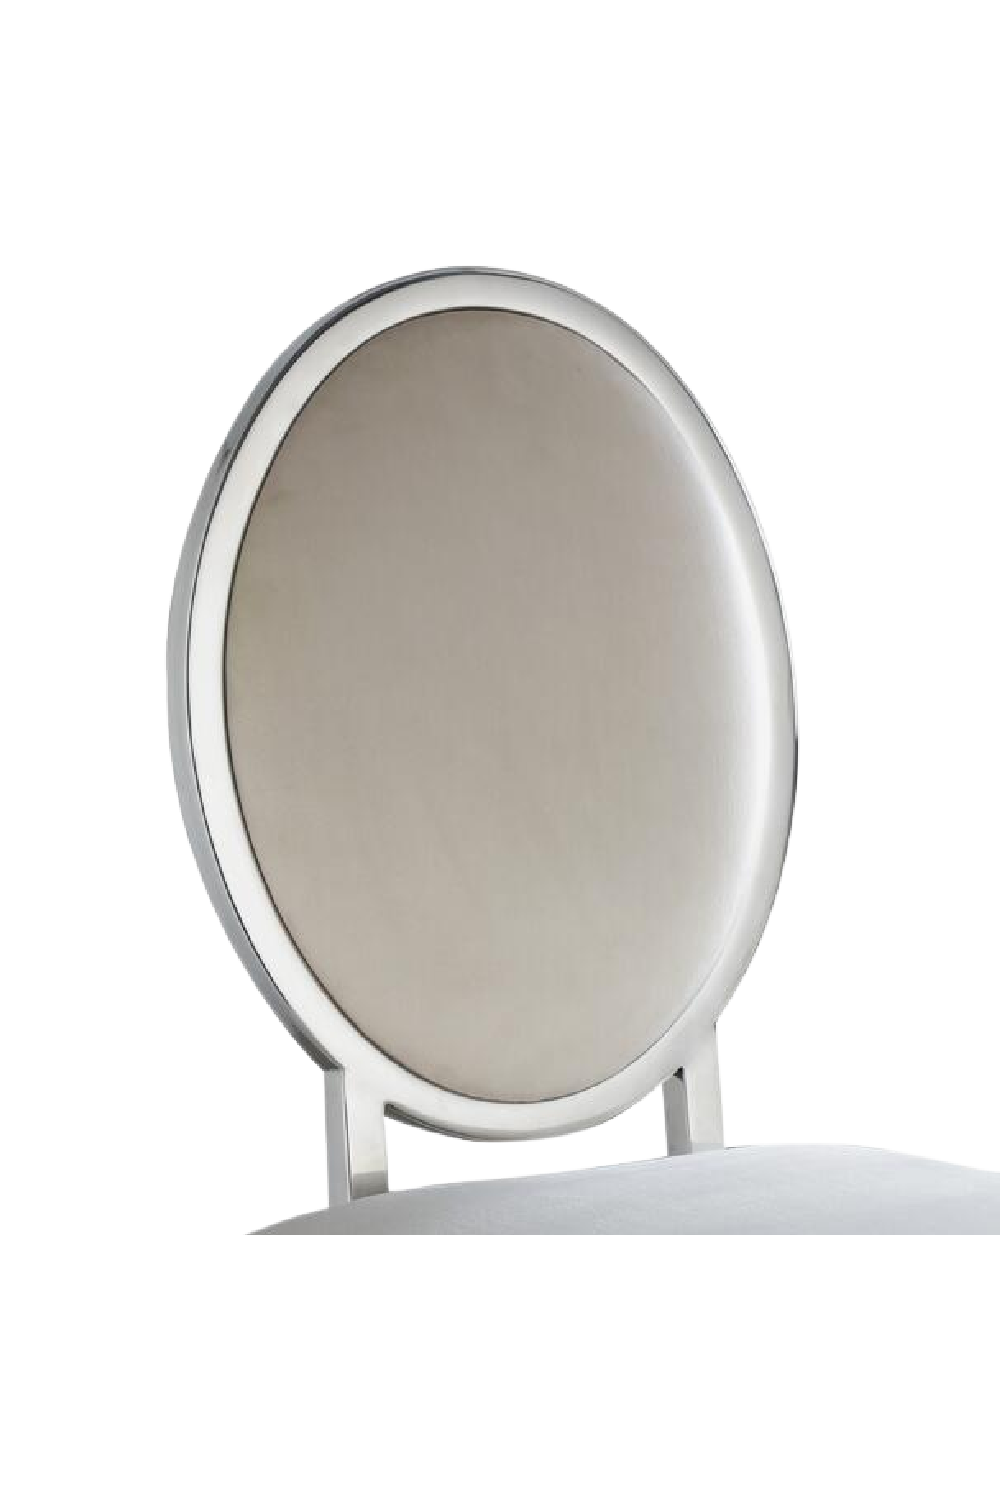 Silver Framed Modern Dining Chair | Andrew Martin Chloe | Oroa.com